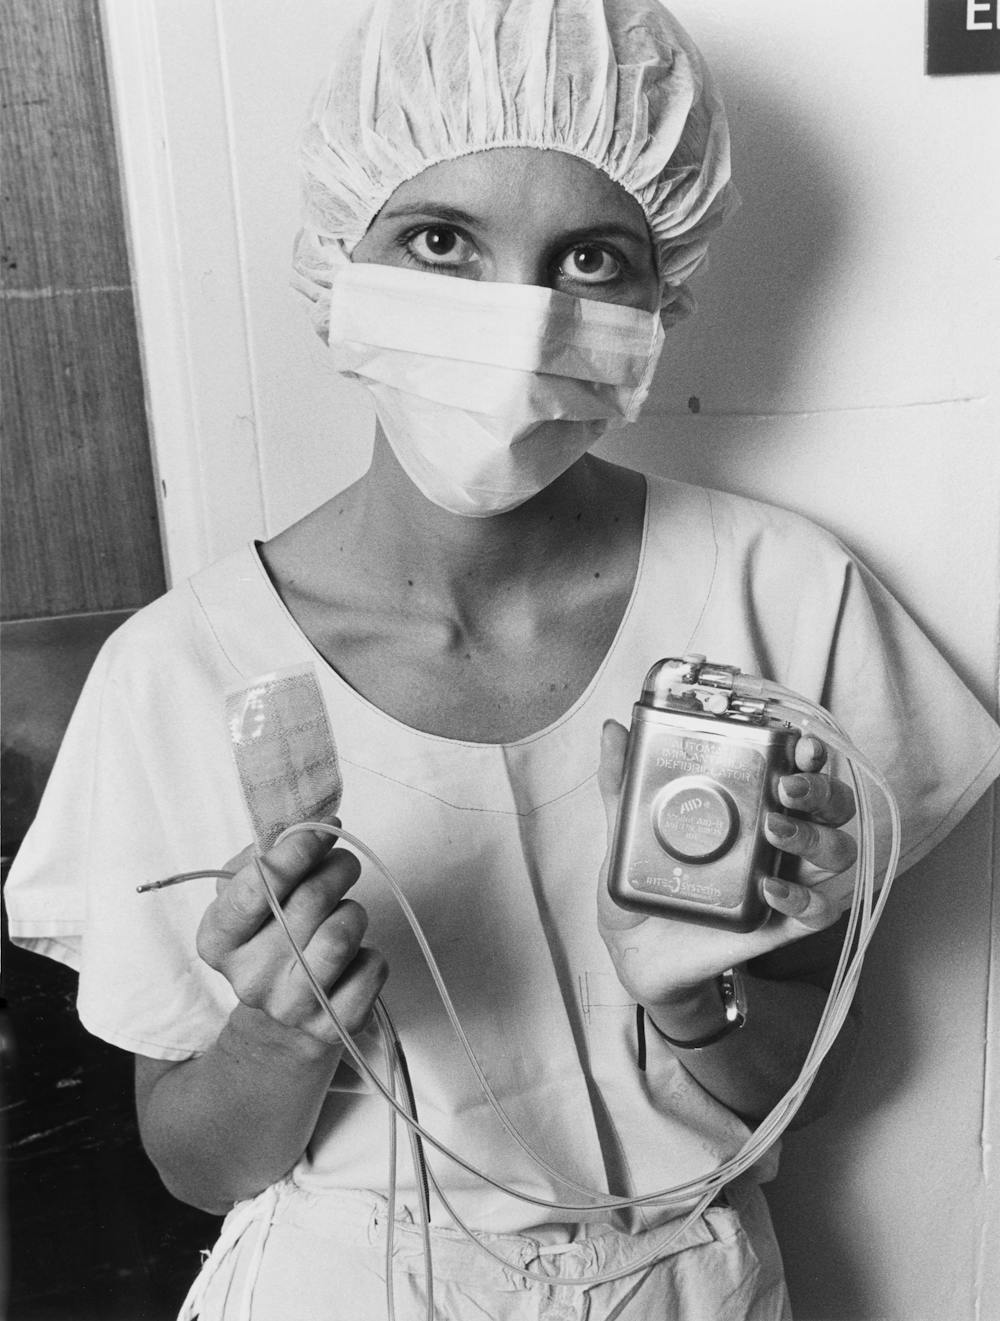 Theatre nurse with Automatic Implantable Cardioverter Defibrillator device 1984